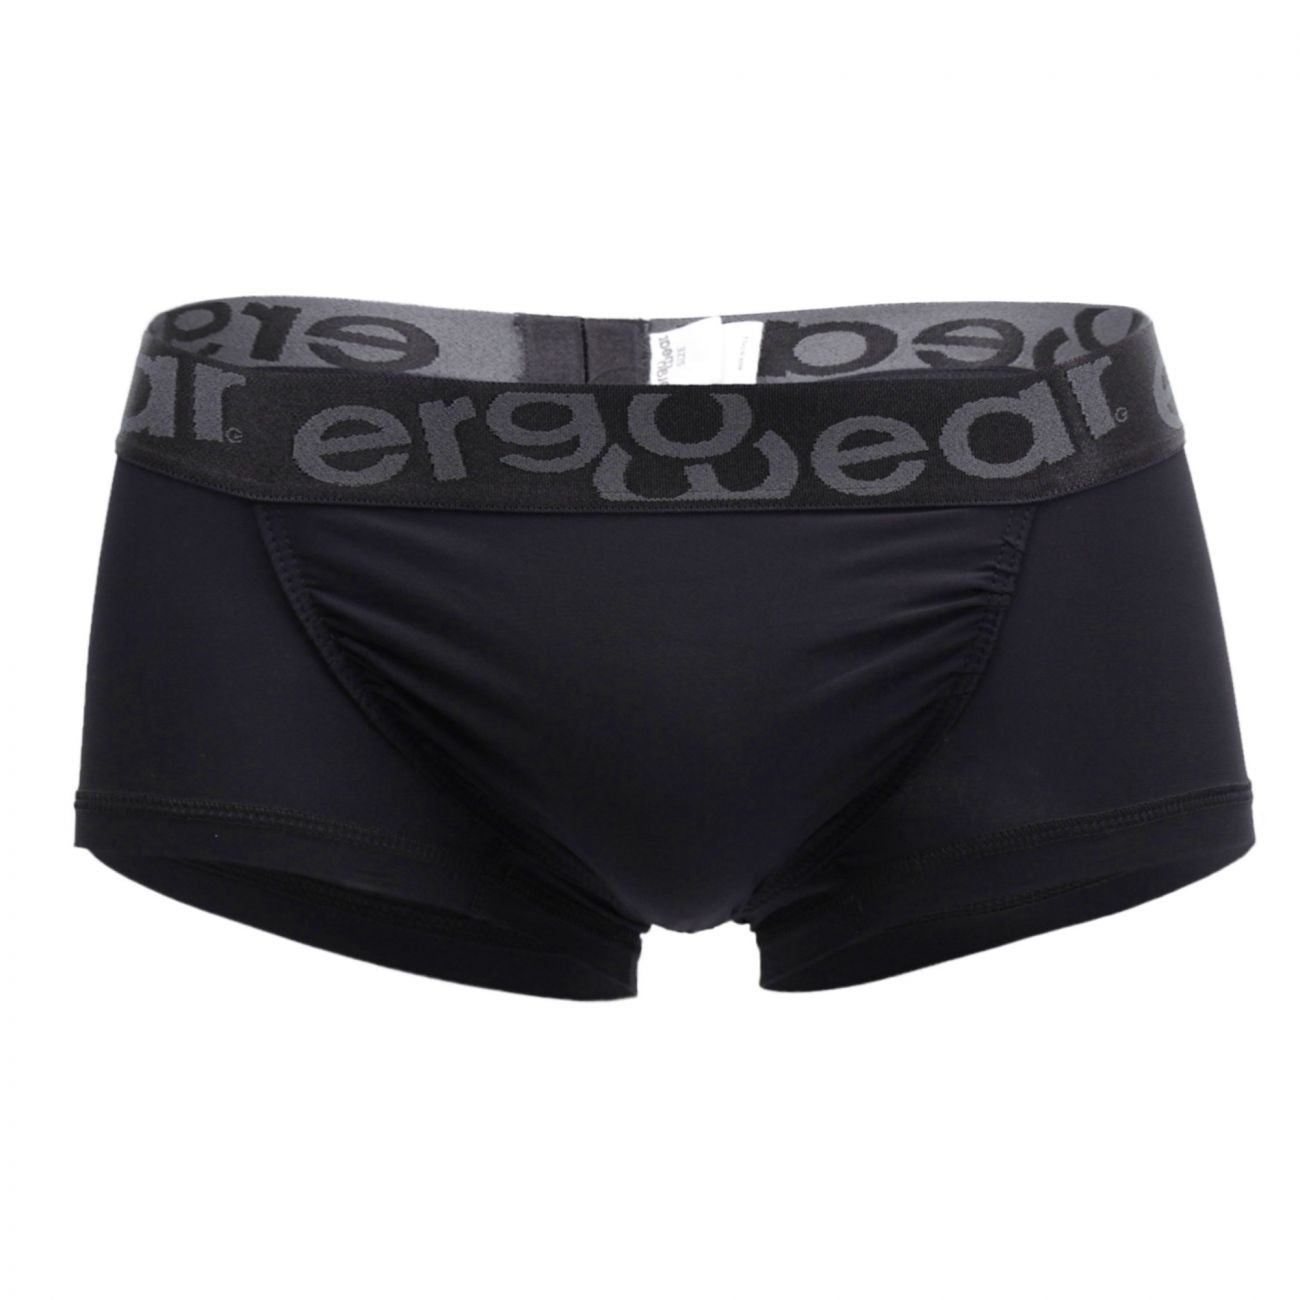 under-yours - FEEL XV Soho Boxer Briefs - ErgoWear - Mens Underwear